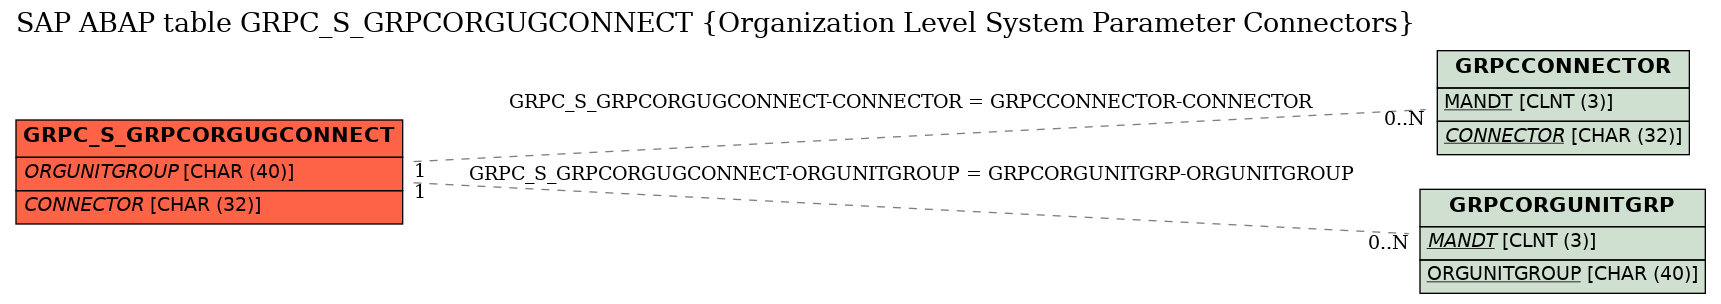 E-R Diagram for table GRPC_S_GRPCORGUGCONNECT (Organization Level System Parameter Connectors)